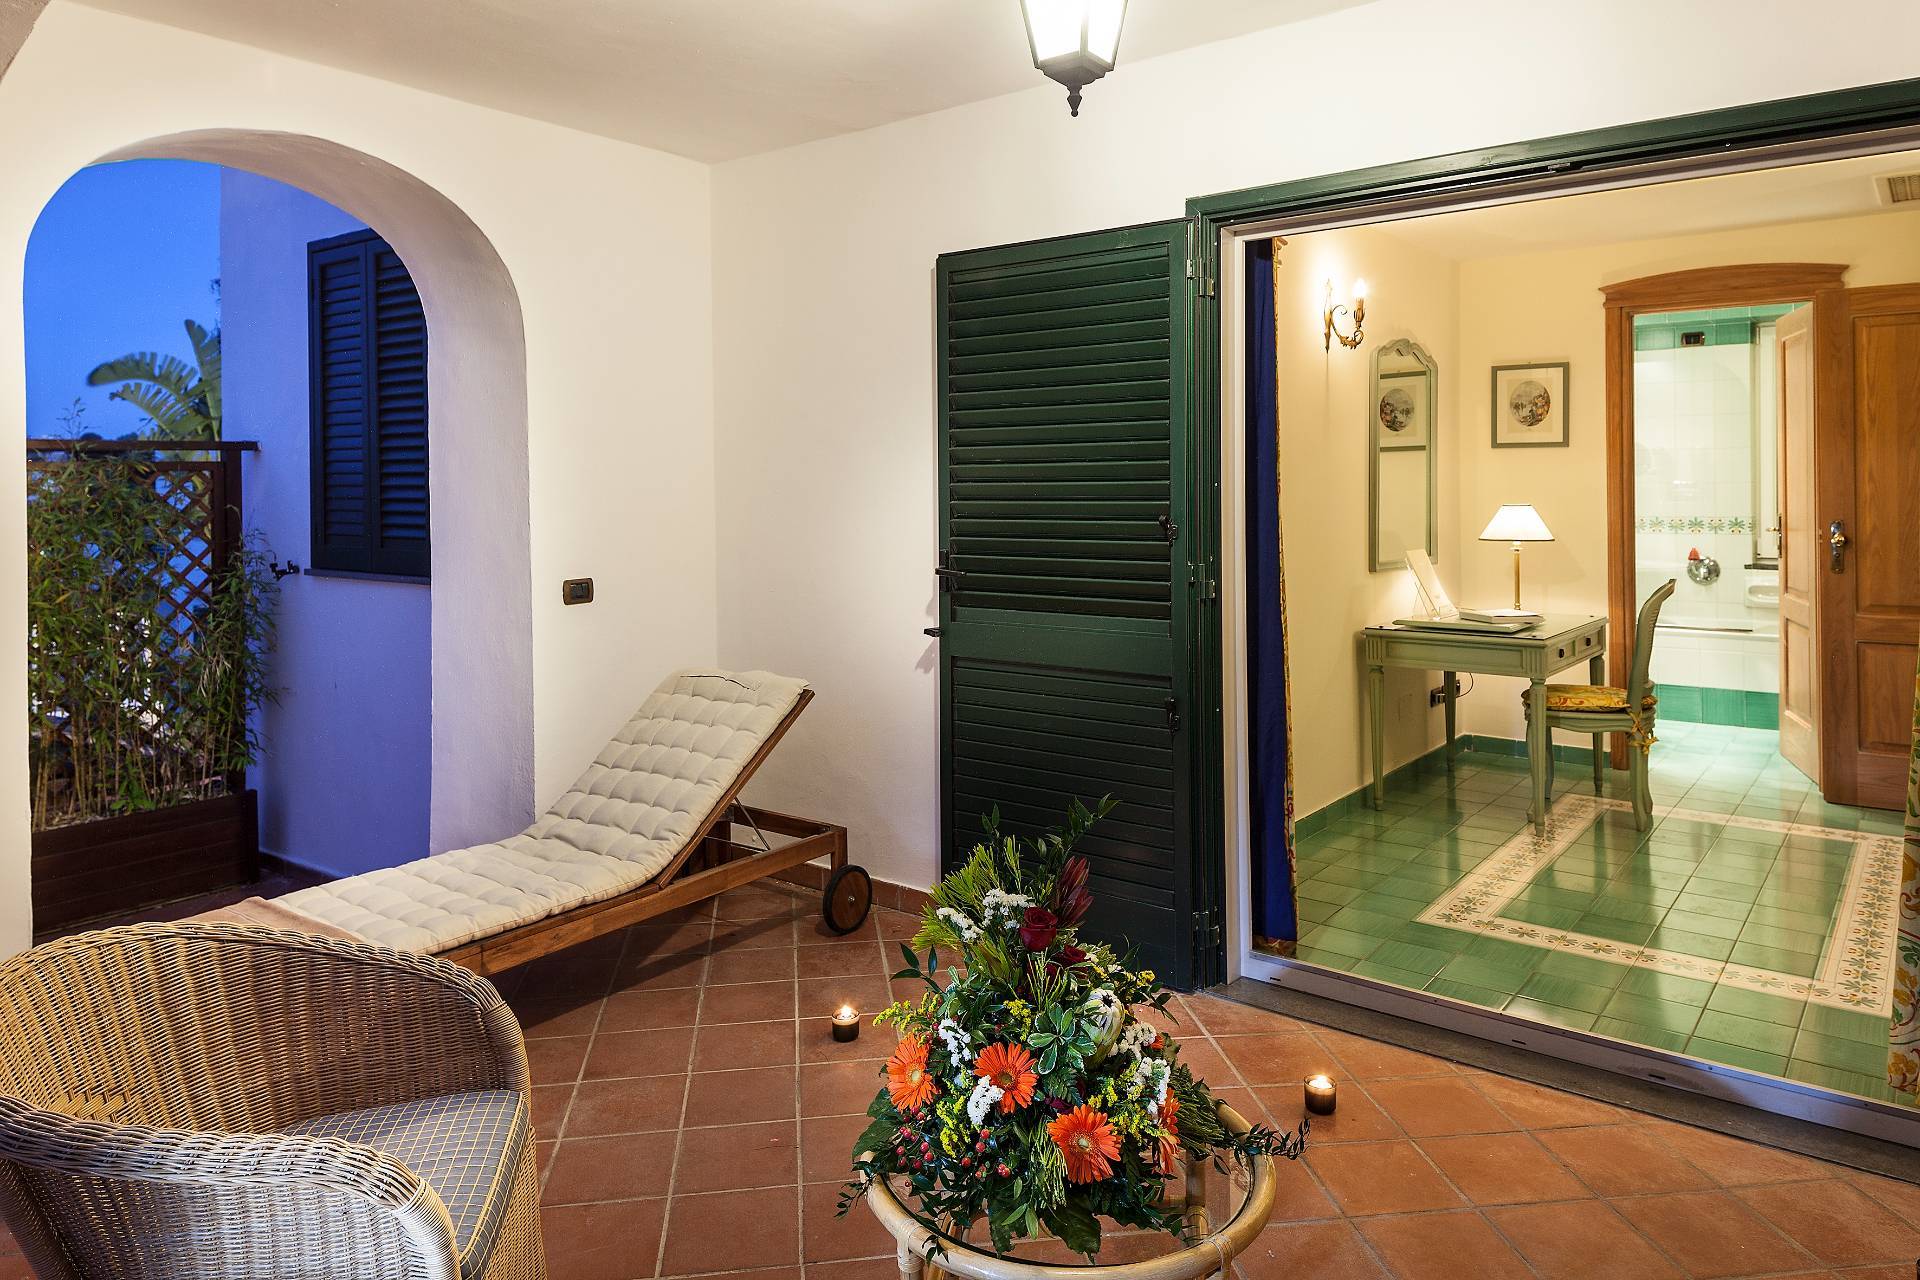 Villa in Vendita a Ischia: 5 locali, 420 mq - Foto 6